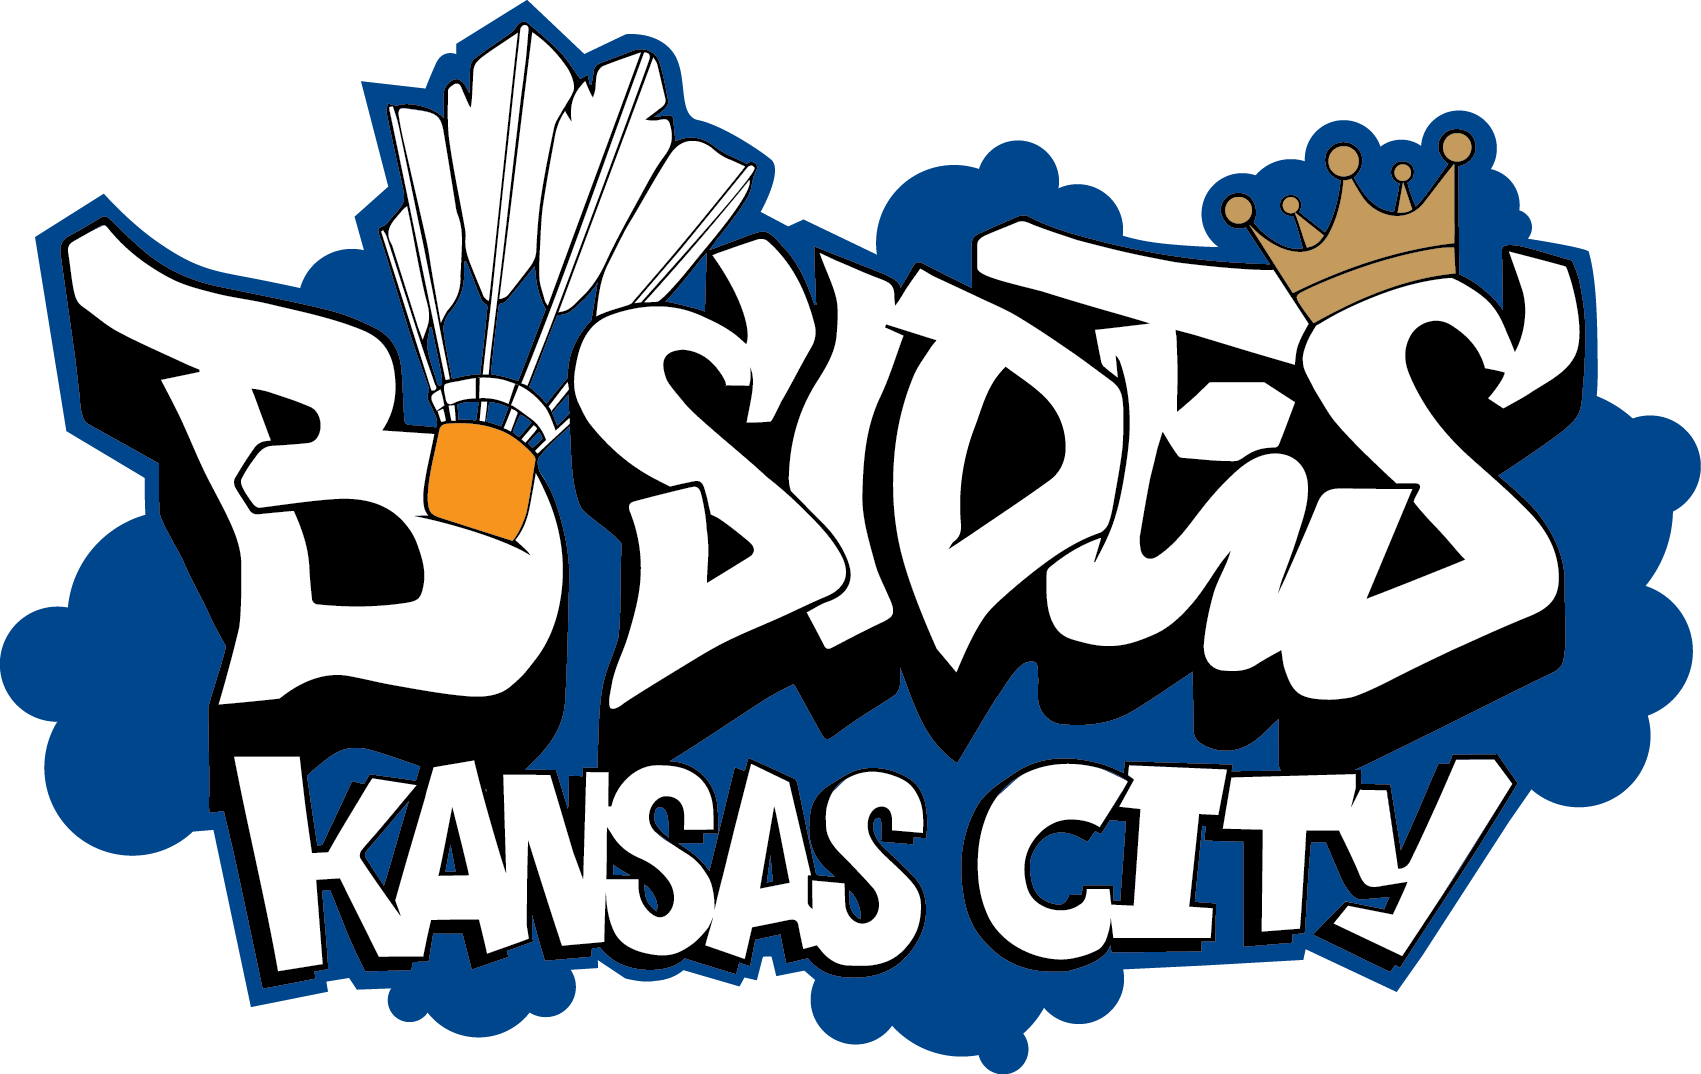 BSides Kansas City Missouri